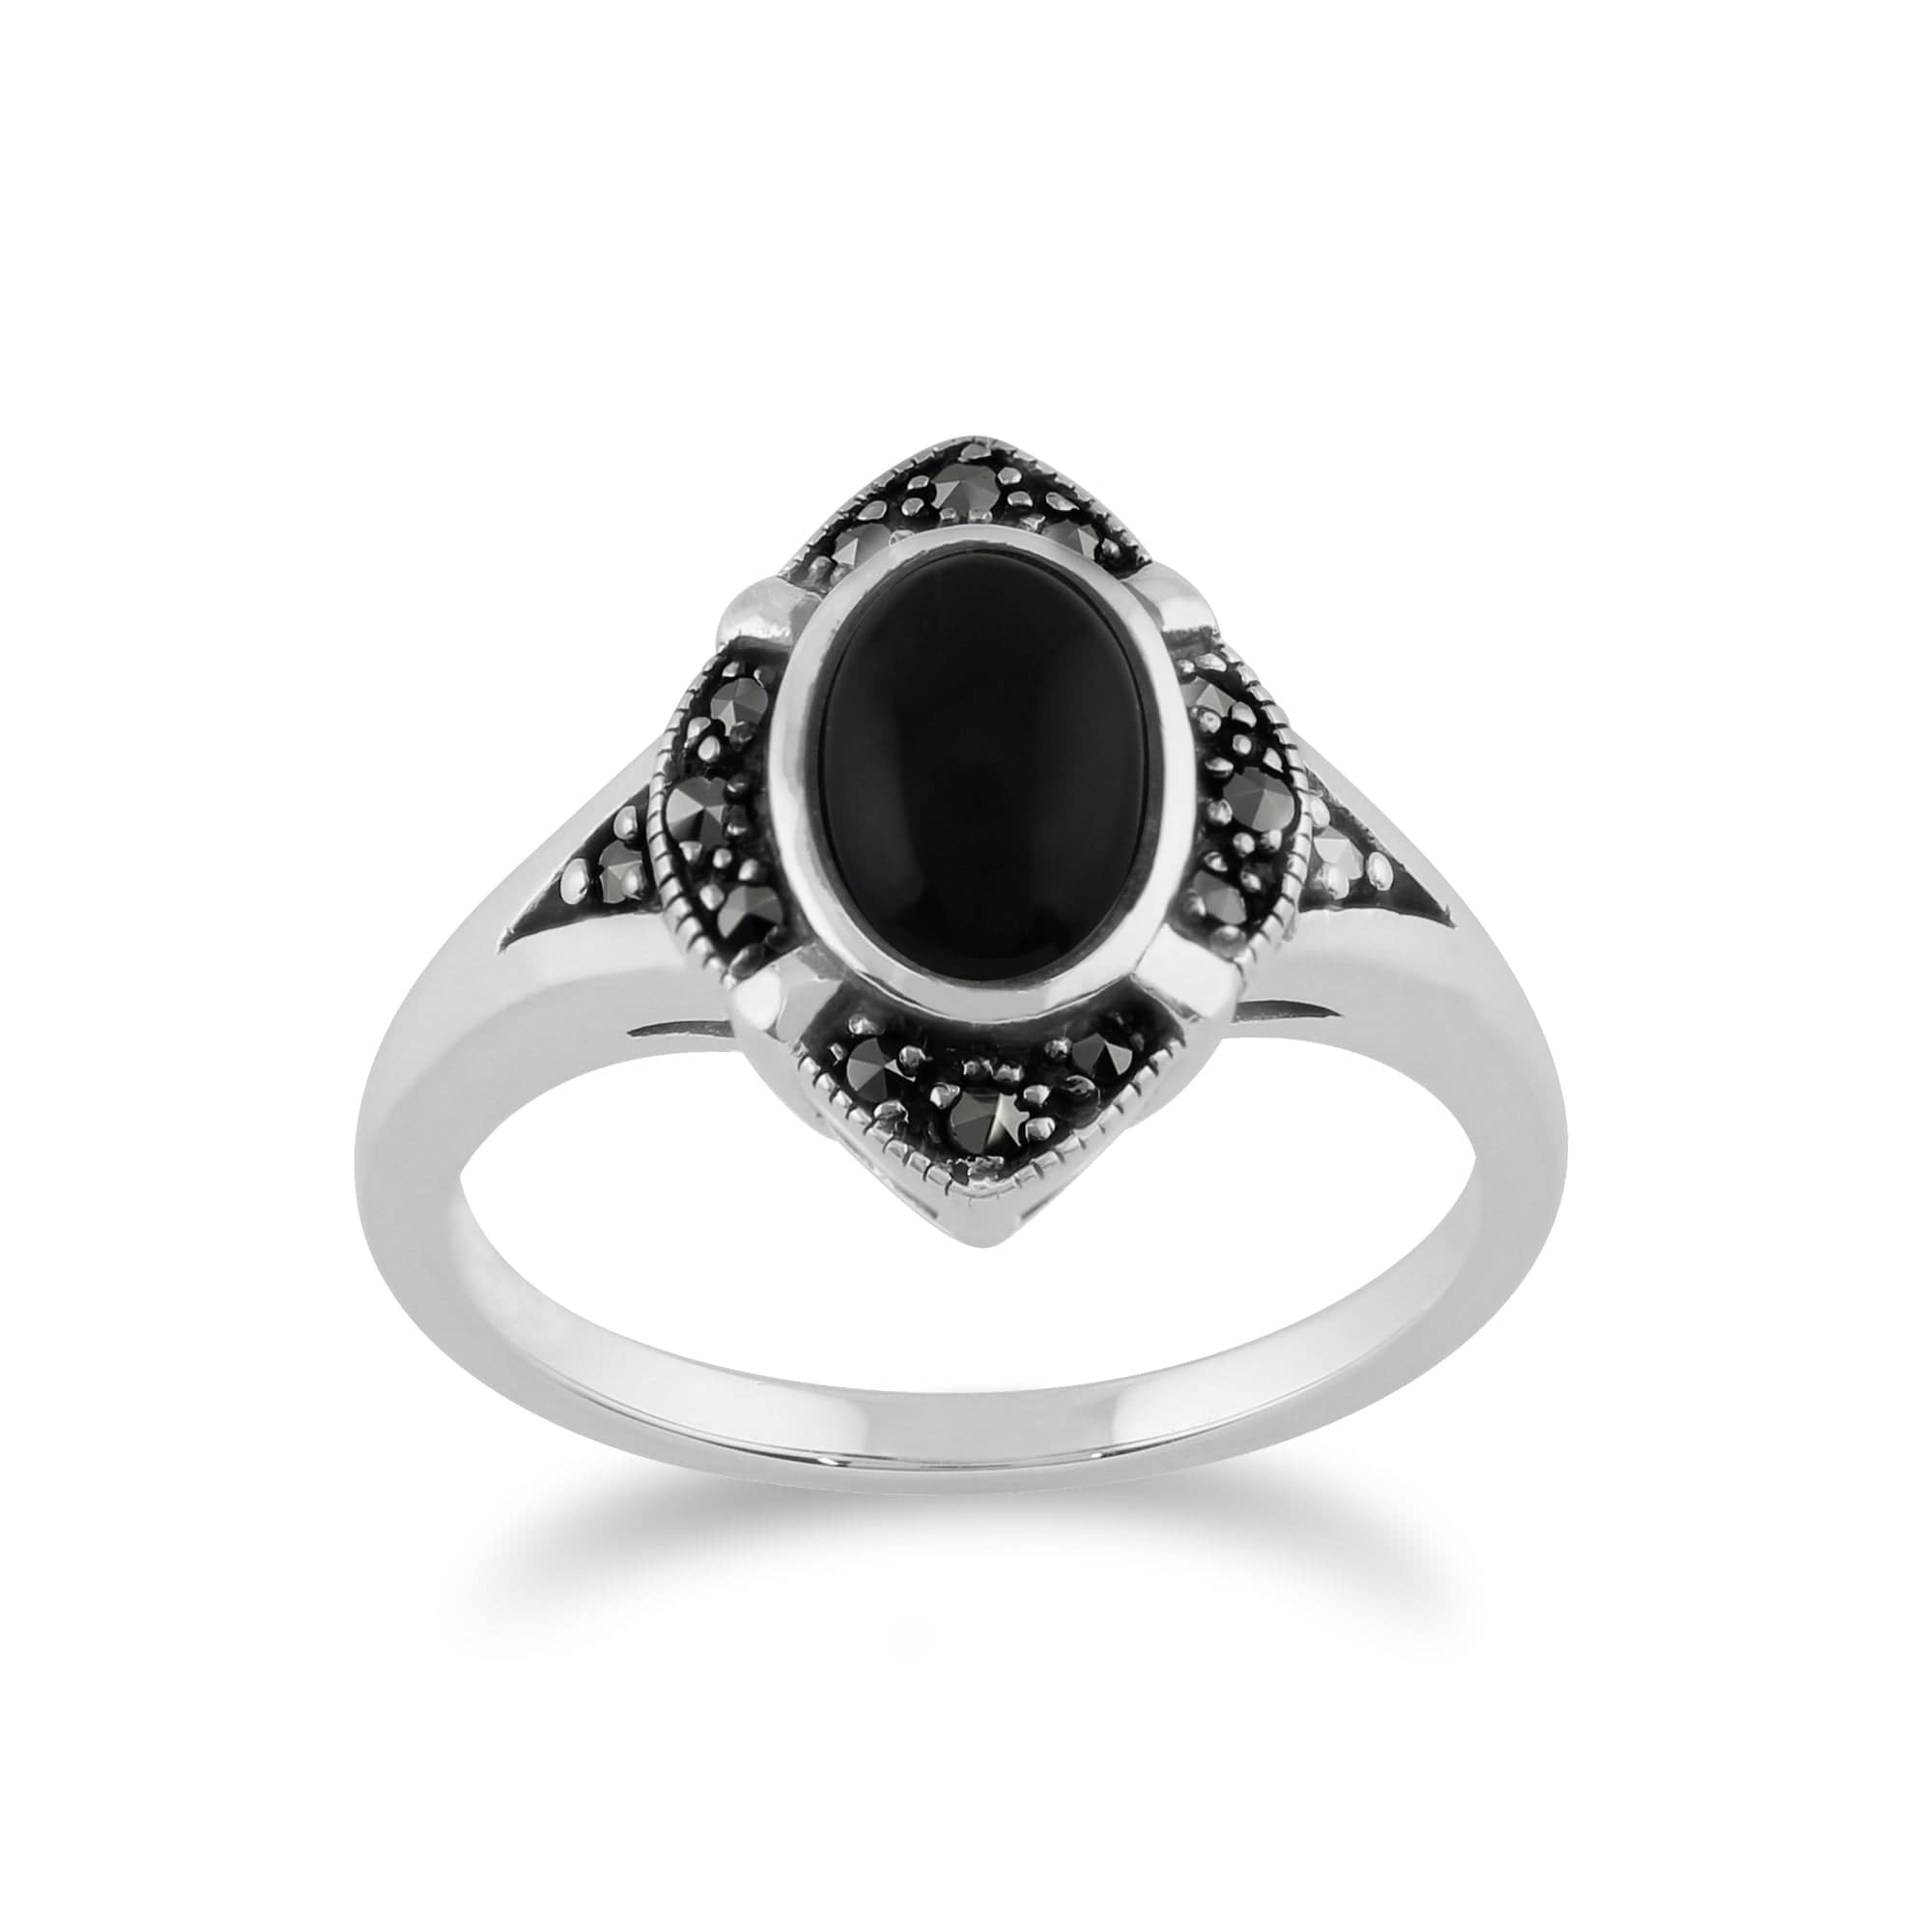 Gemondo 925 Sterling Silver 1.00ct Black Onyx & Marcasite Art Deco Ring Image 1